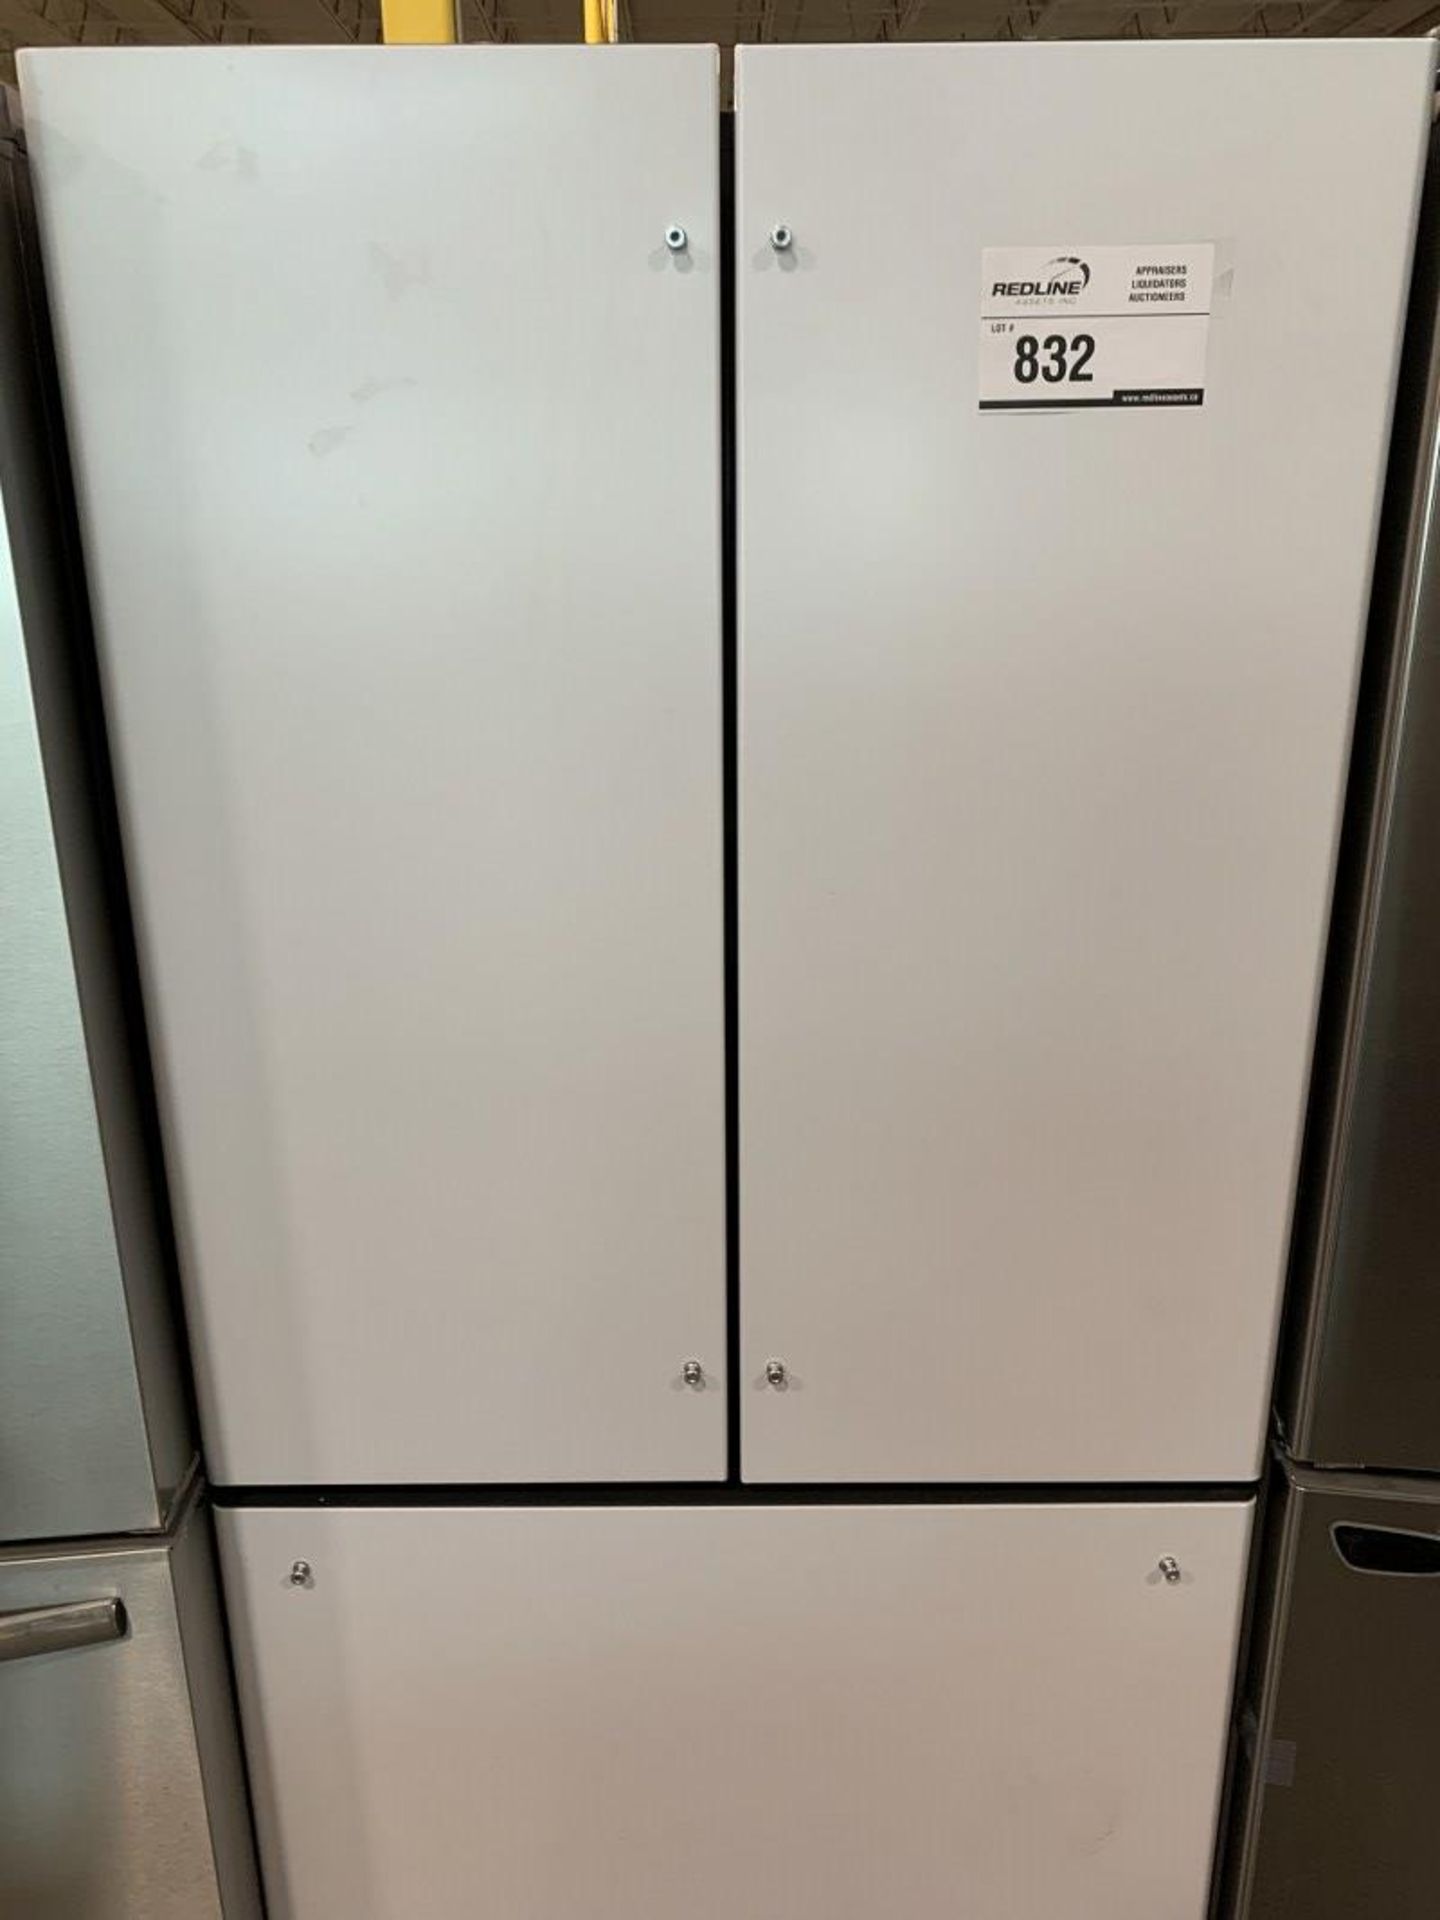 Ge Cafe -French Door Refrigerator, 36 Inch Width, Energy Star Certified, Counter Depth, 23.1 Cu. Ft.